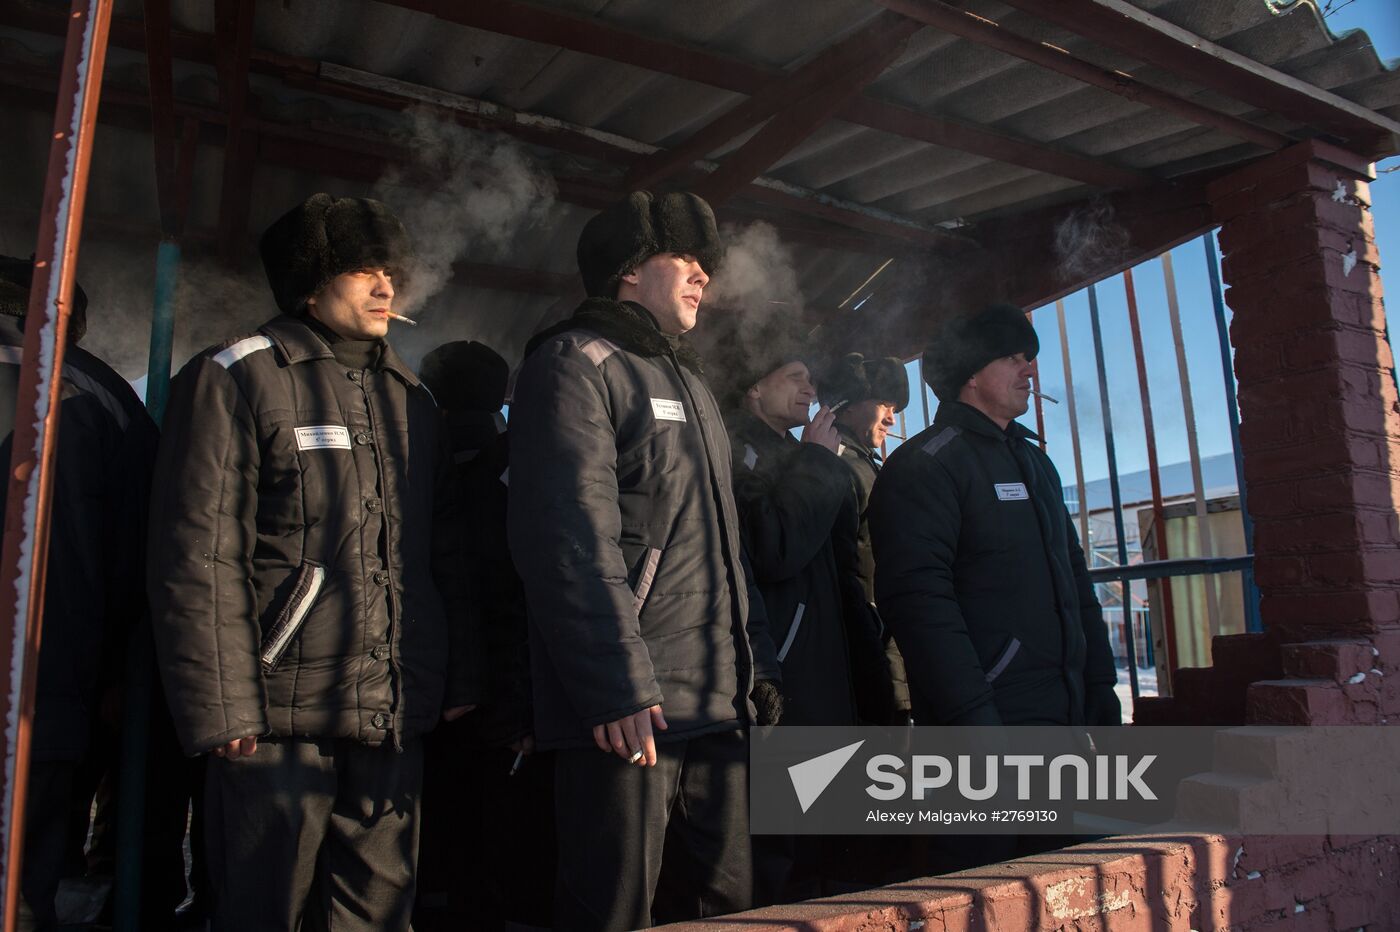 Hockey match in Omsk prison